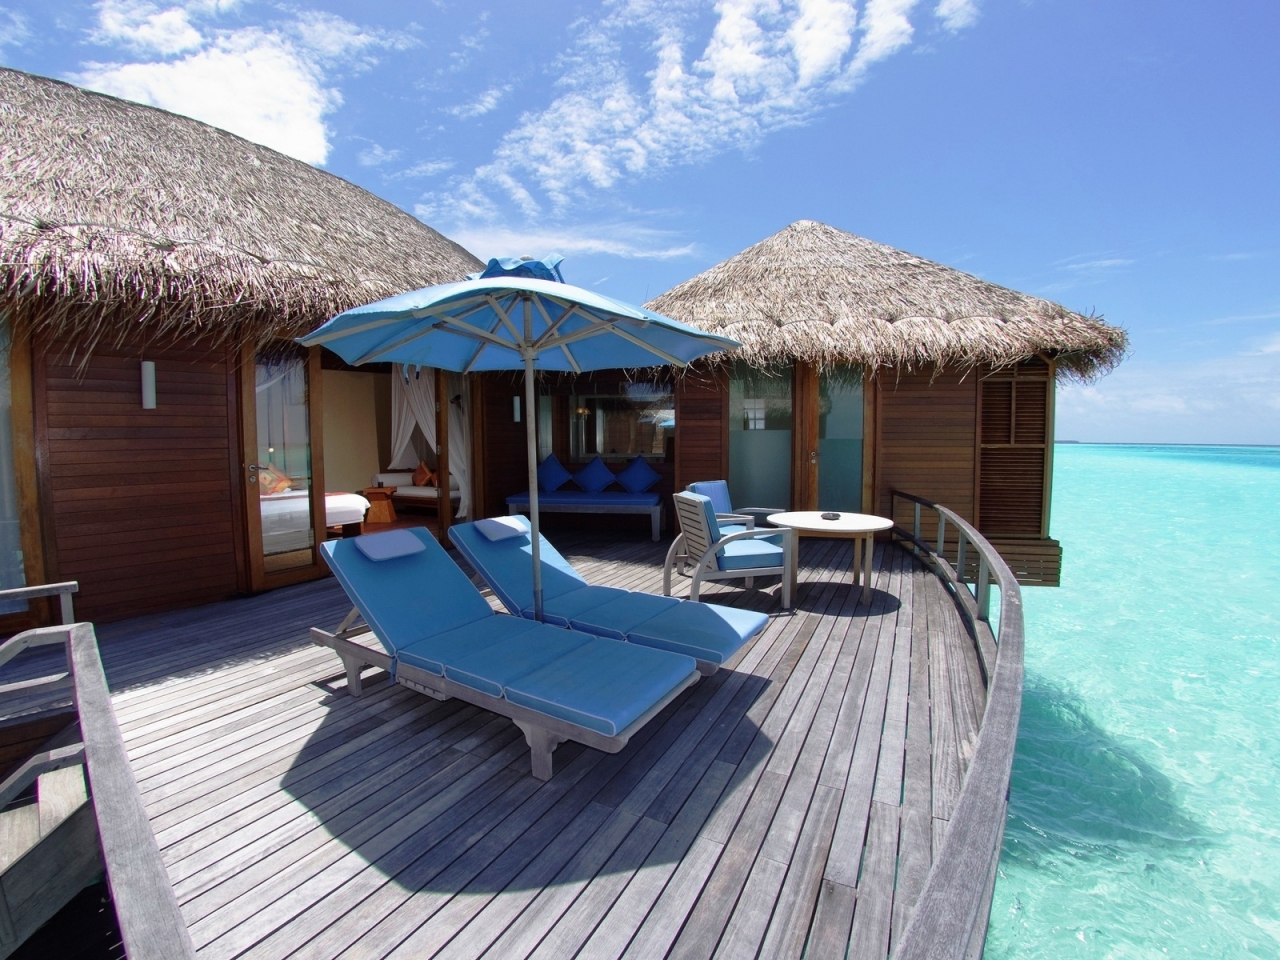 Maldives Resort for 1280 x 960 resolution